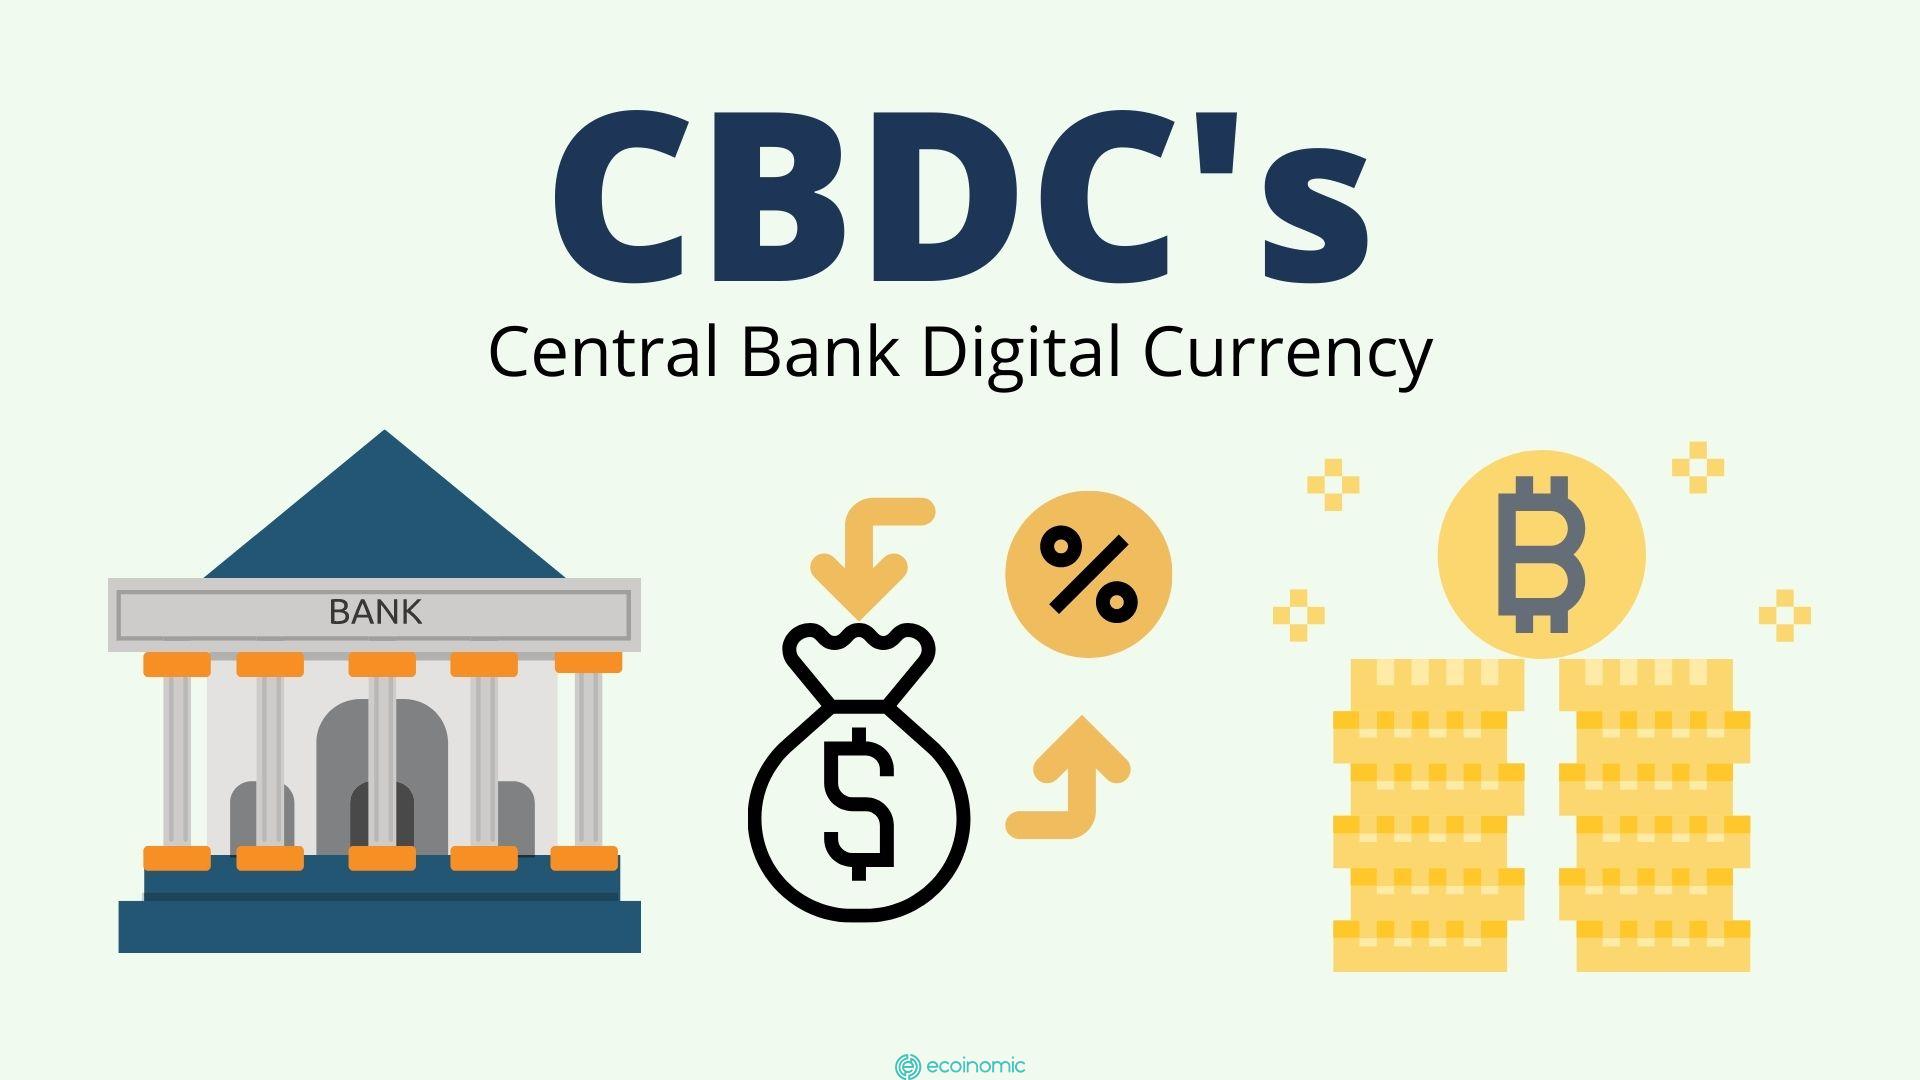 Taiwan's central bank will provide CBDC